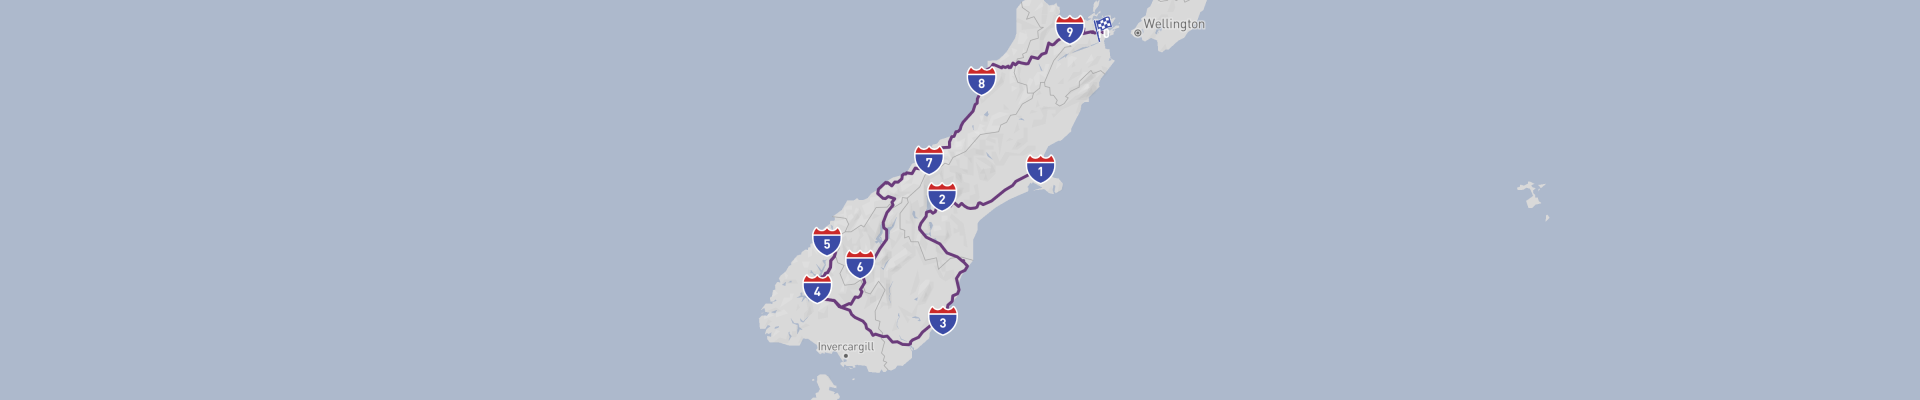 South Island One-Way Road Trip